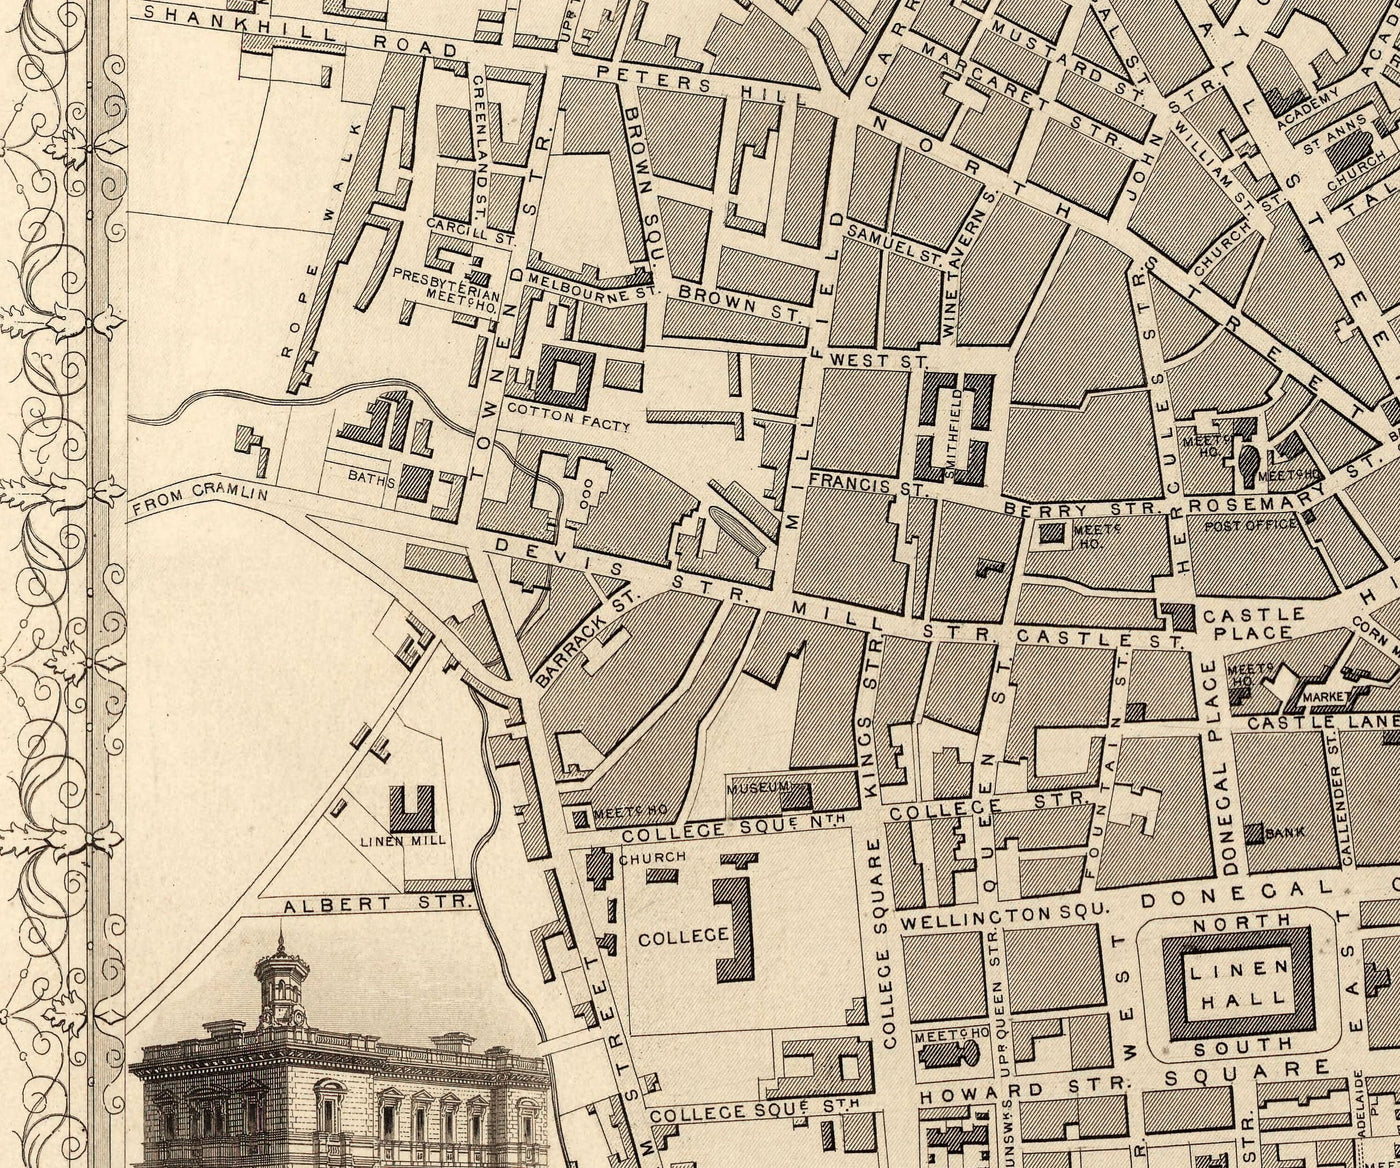 Old Map of Belfast, Ireland in 1851 by Tallis & Rapkin - Queens College, Ulster Railway Station, Ballast Office,